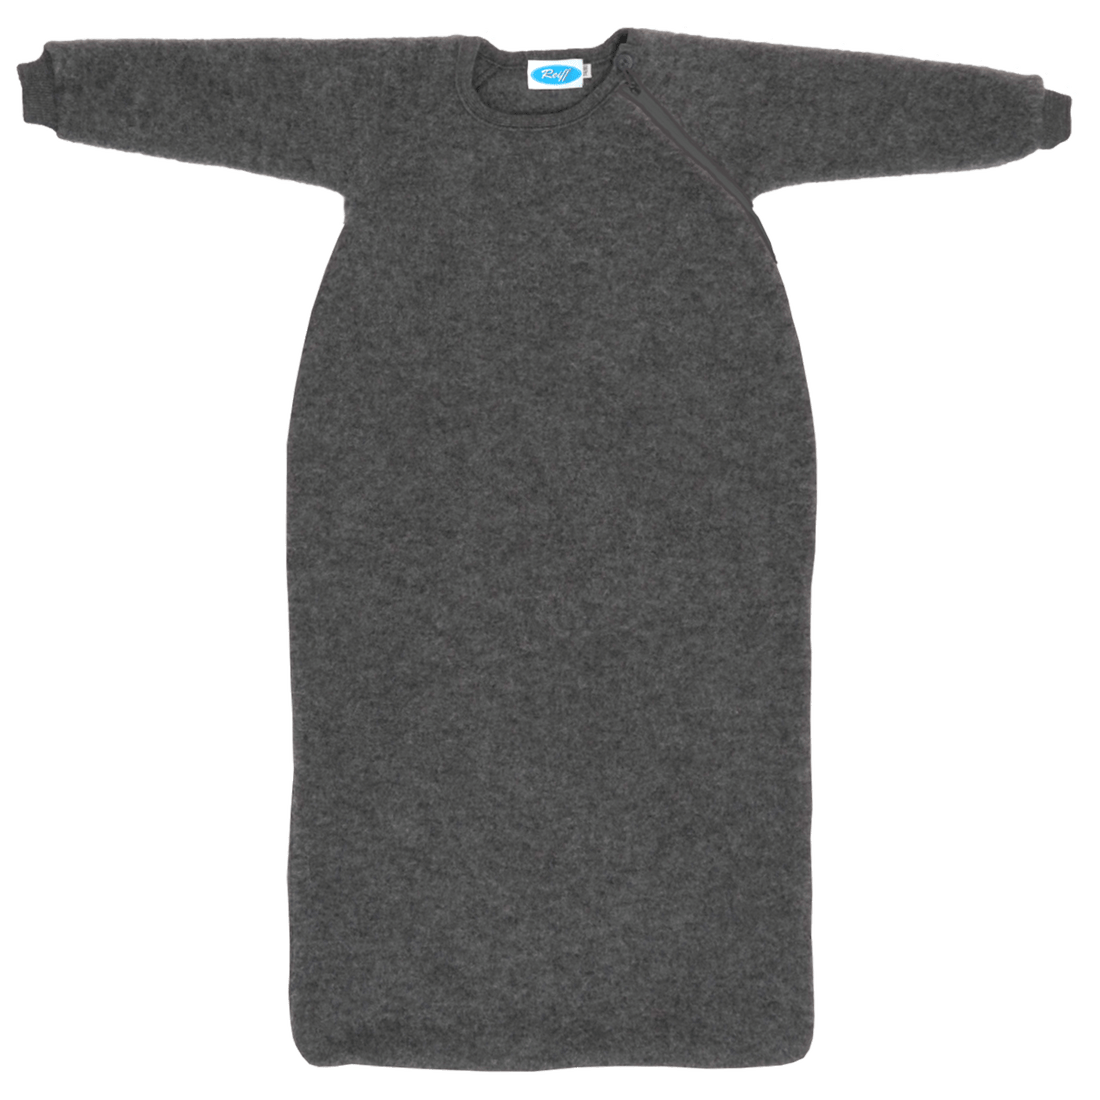 Reiff - Schlafsack mit Arm Wollfleece grau - AURYN Shop